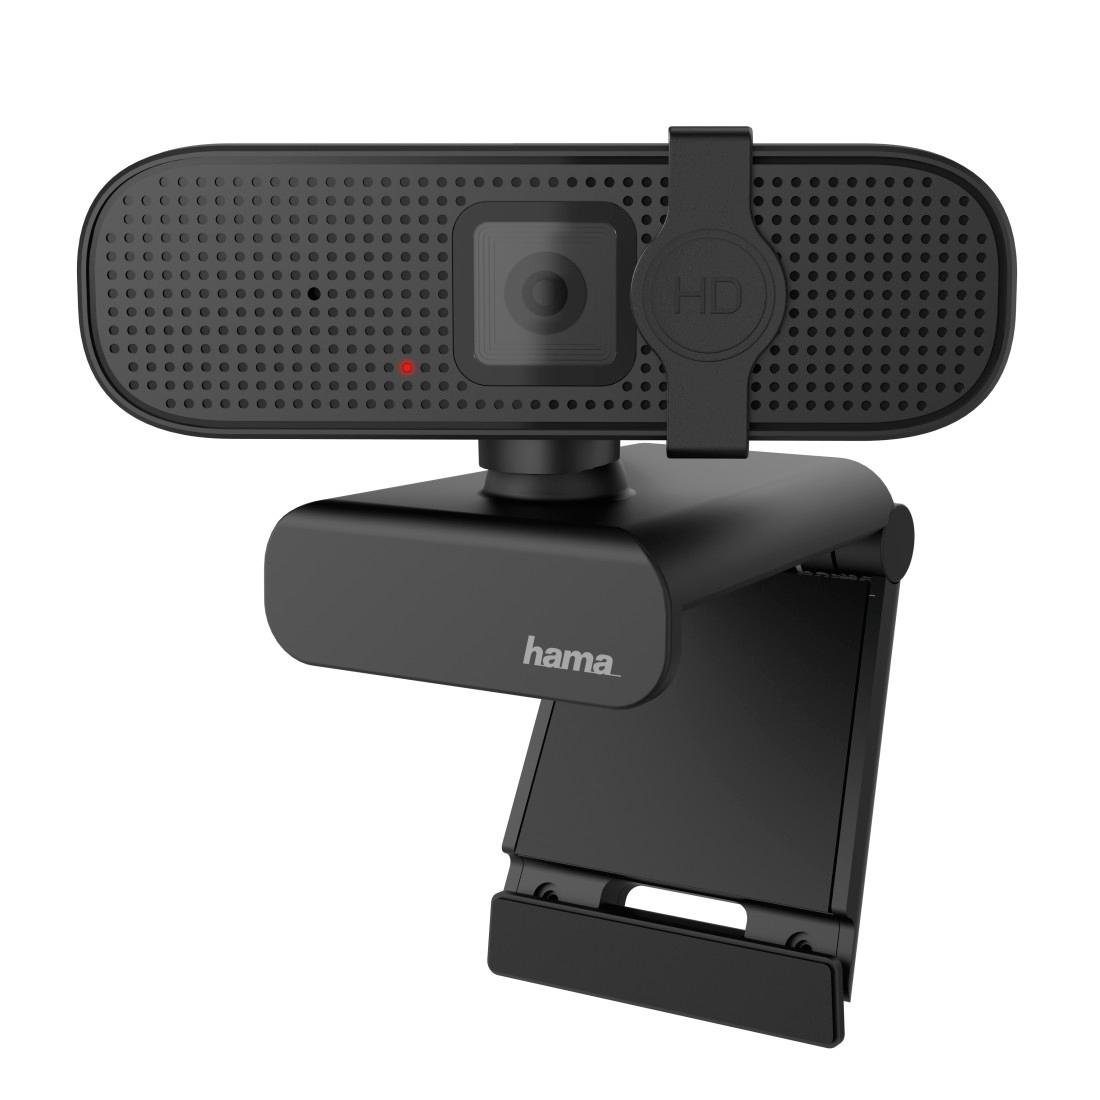 Hama PC-Webcam HD-Webcam 1080p Webcam Full-HD "C-400", Full